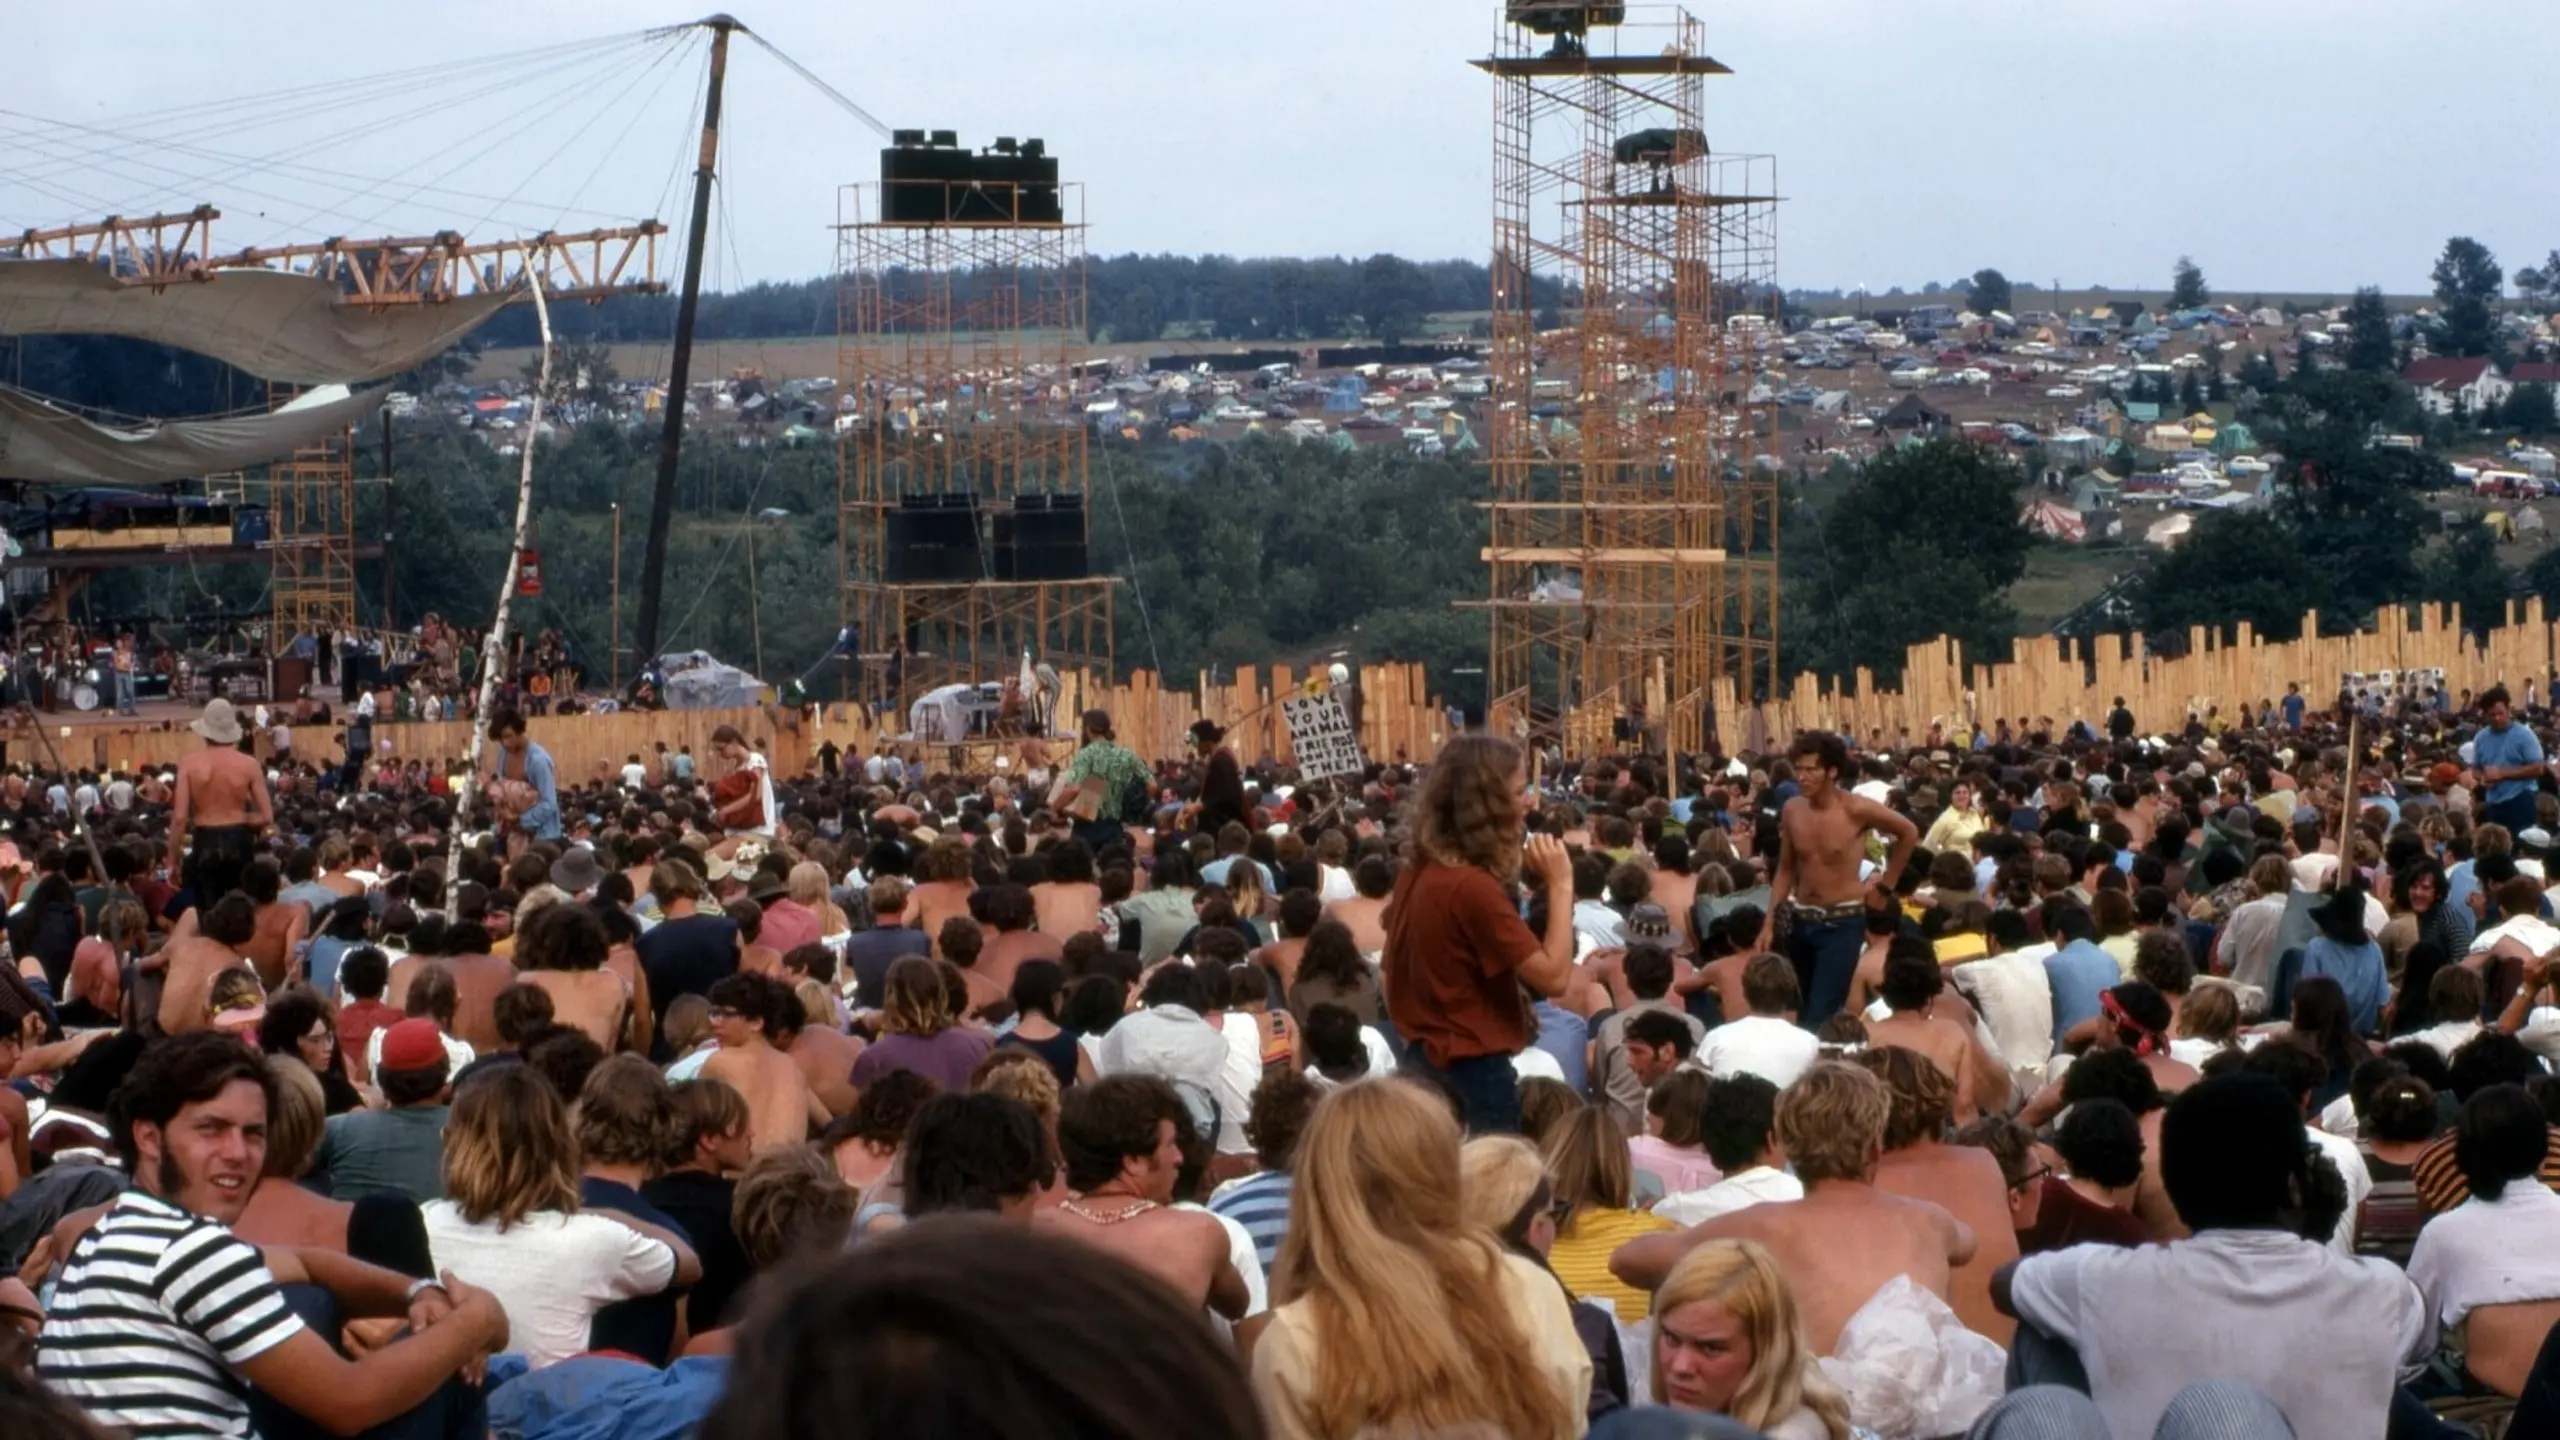 Woodstock - Wie der Mythos entstand